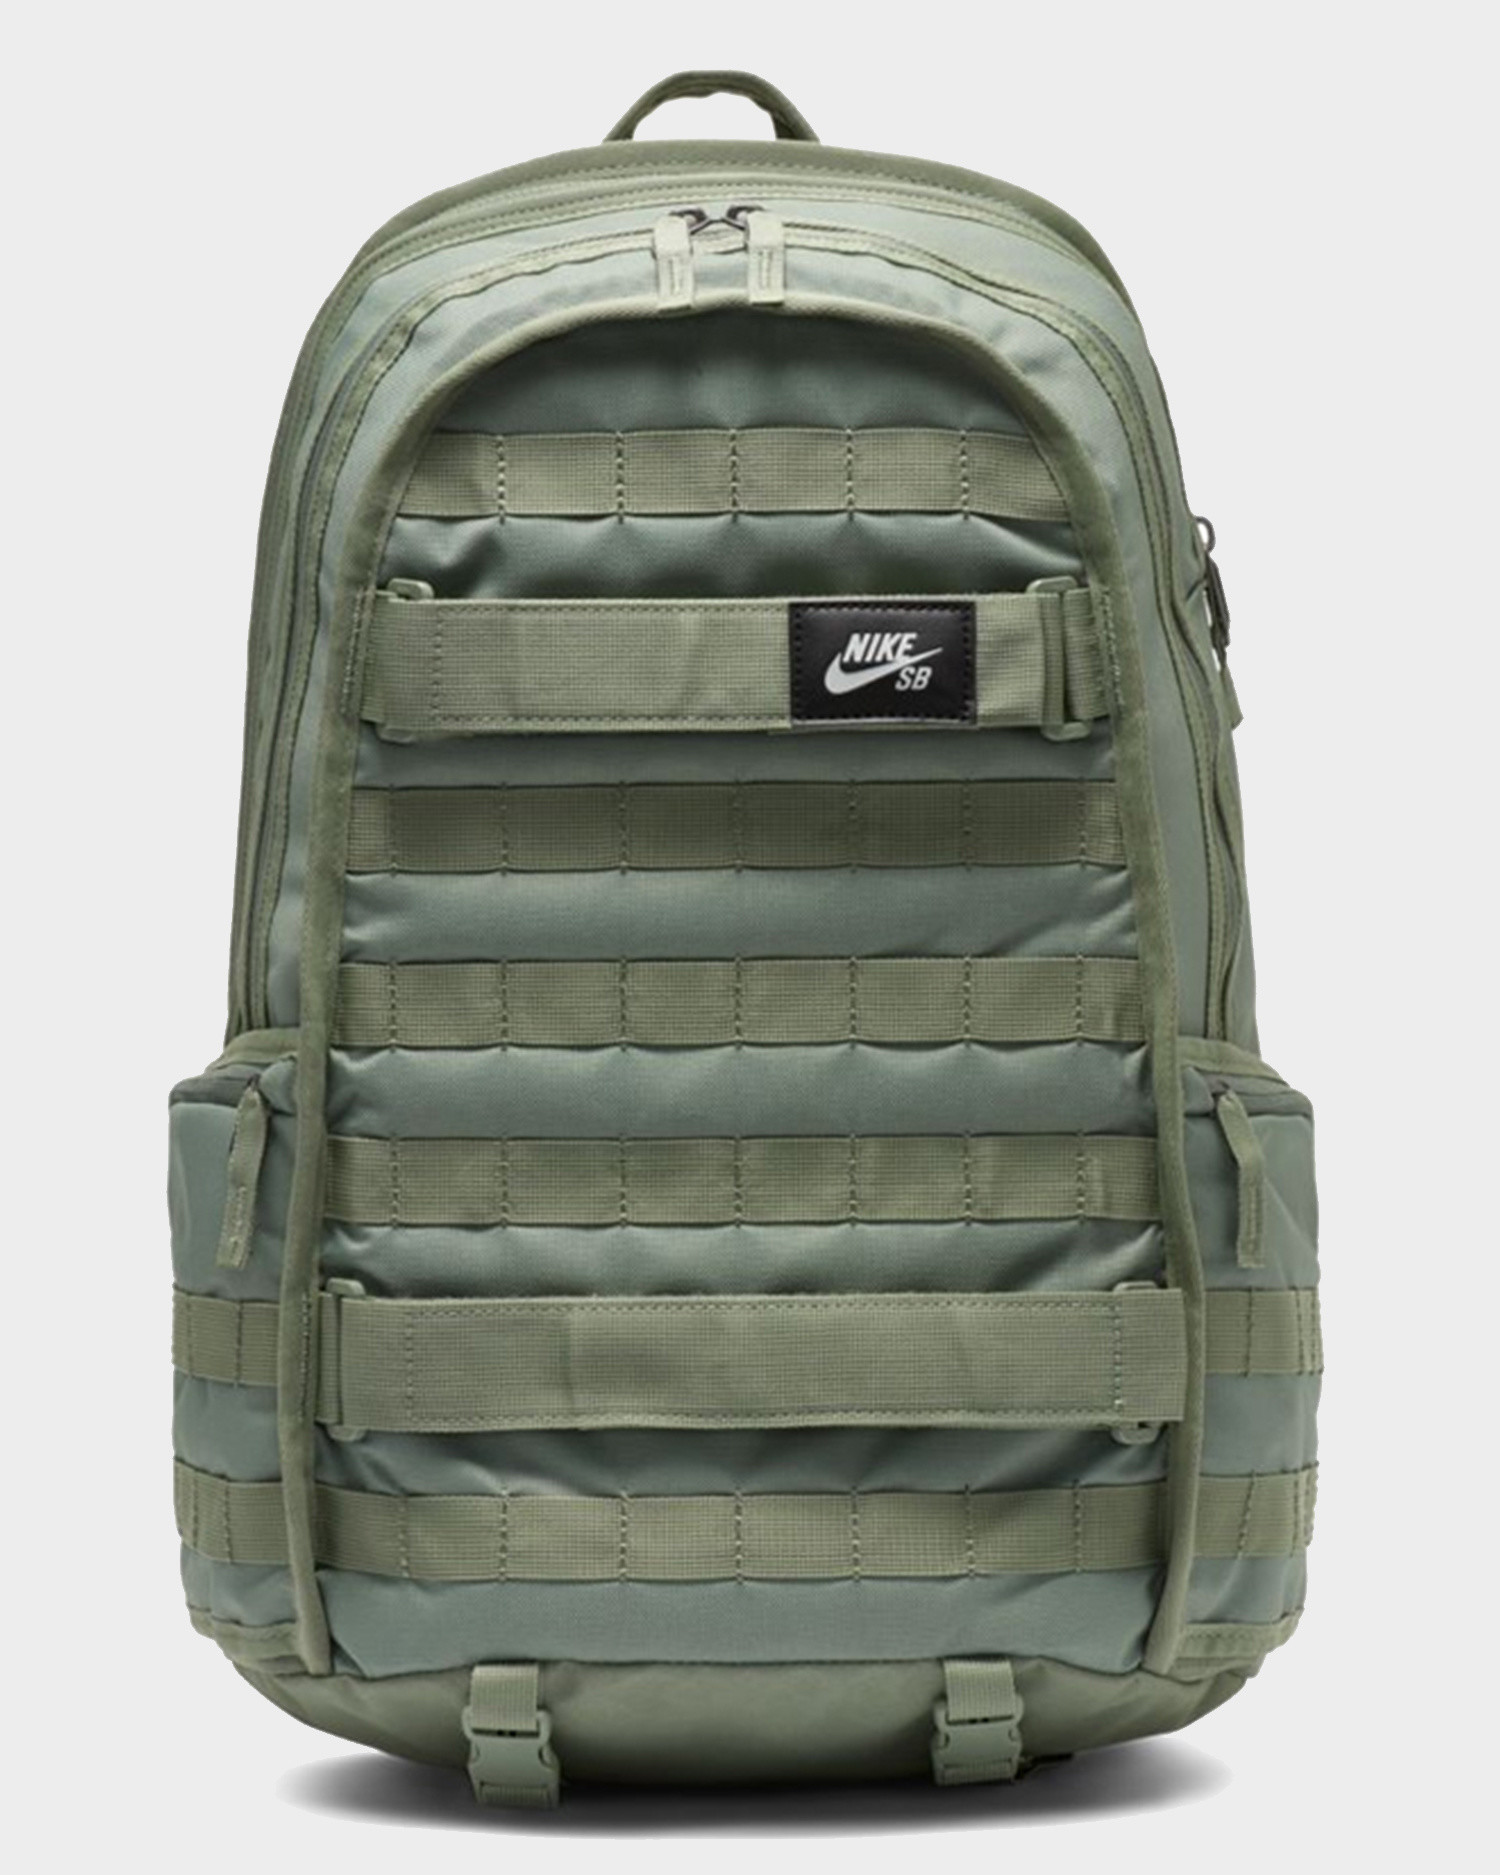 sb rpm backpack